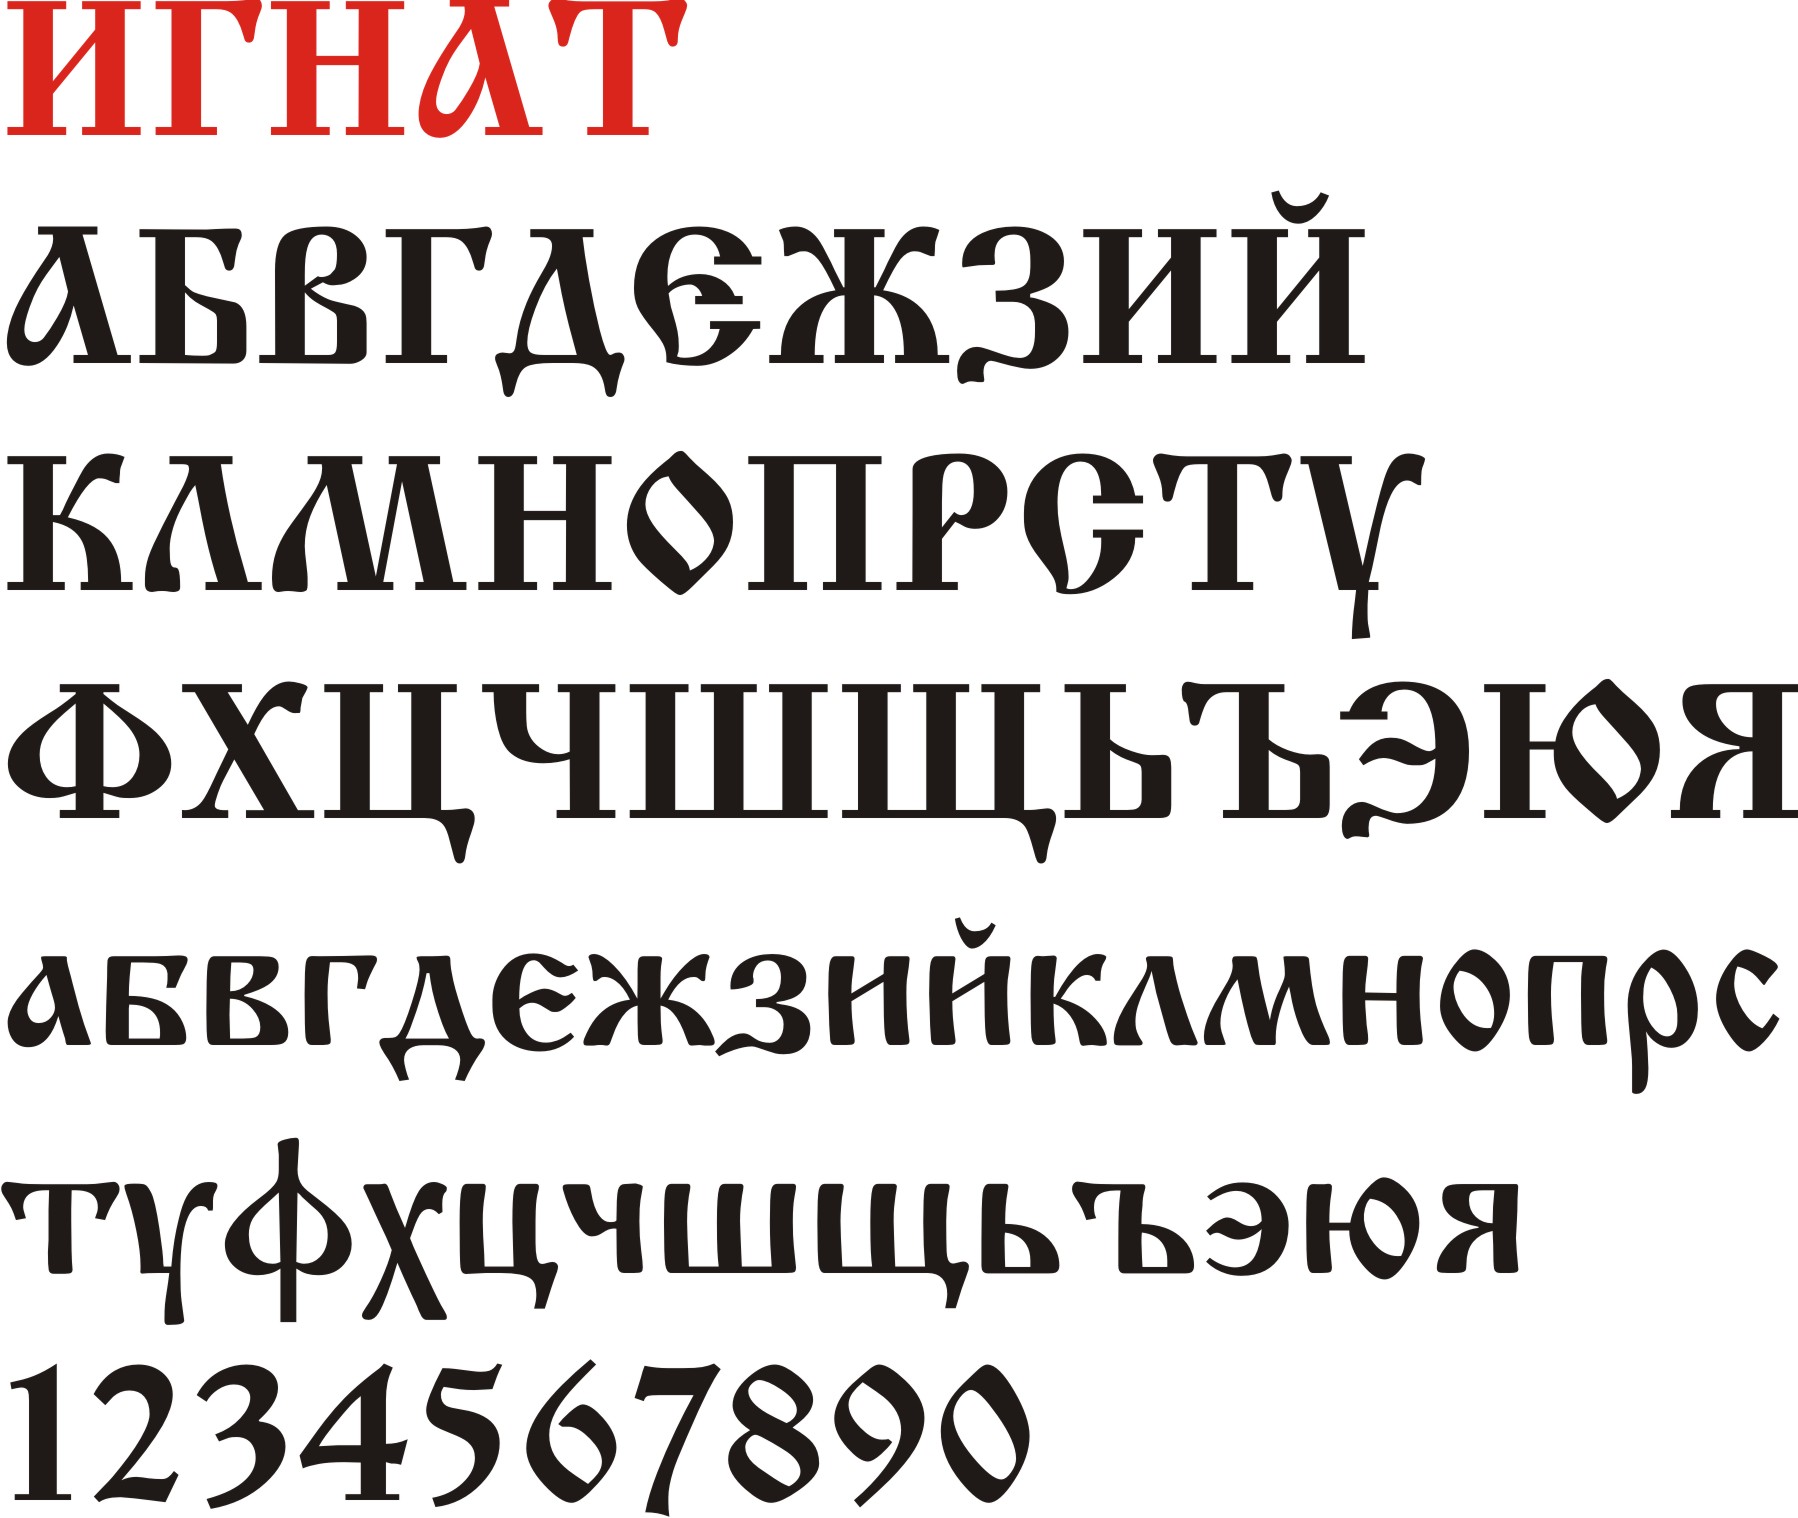 Шрифты для телеграмма русский фото 94